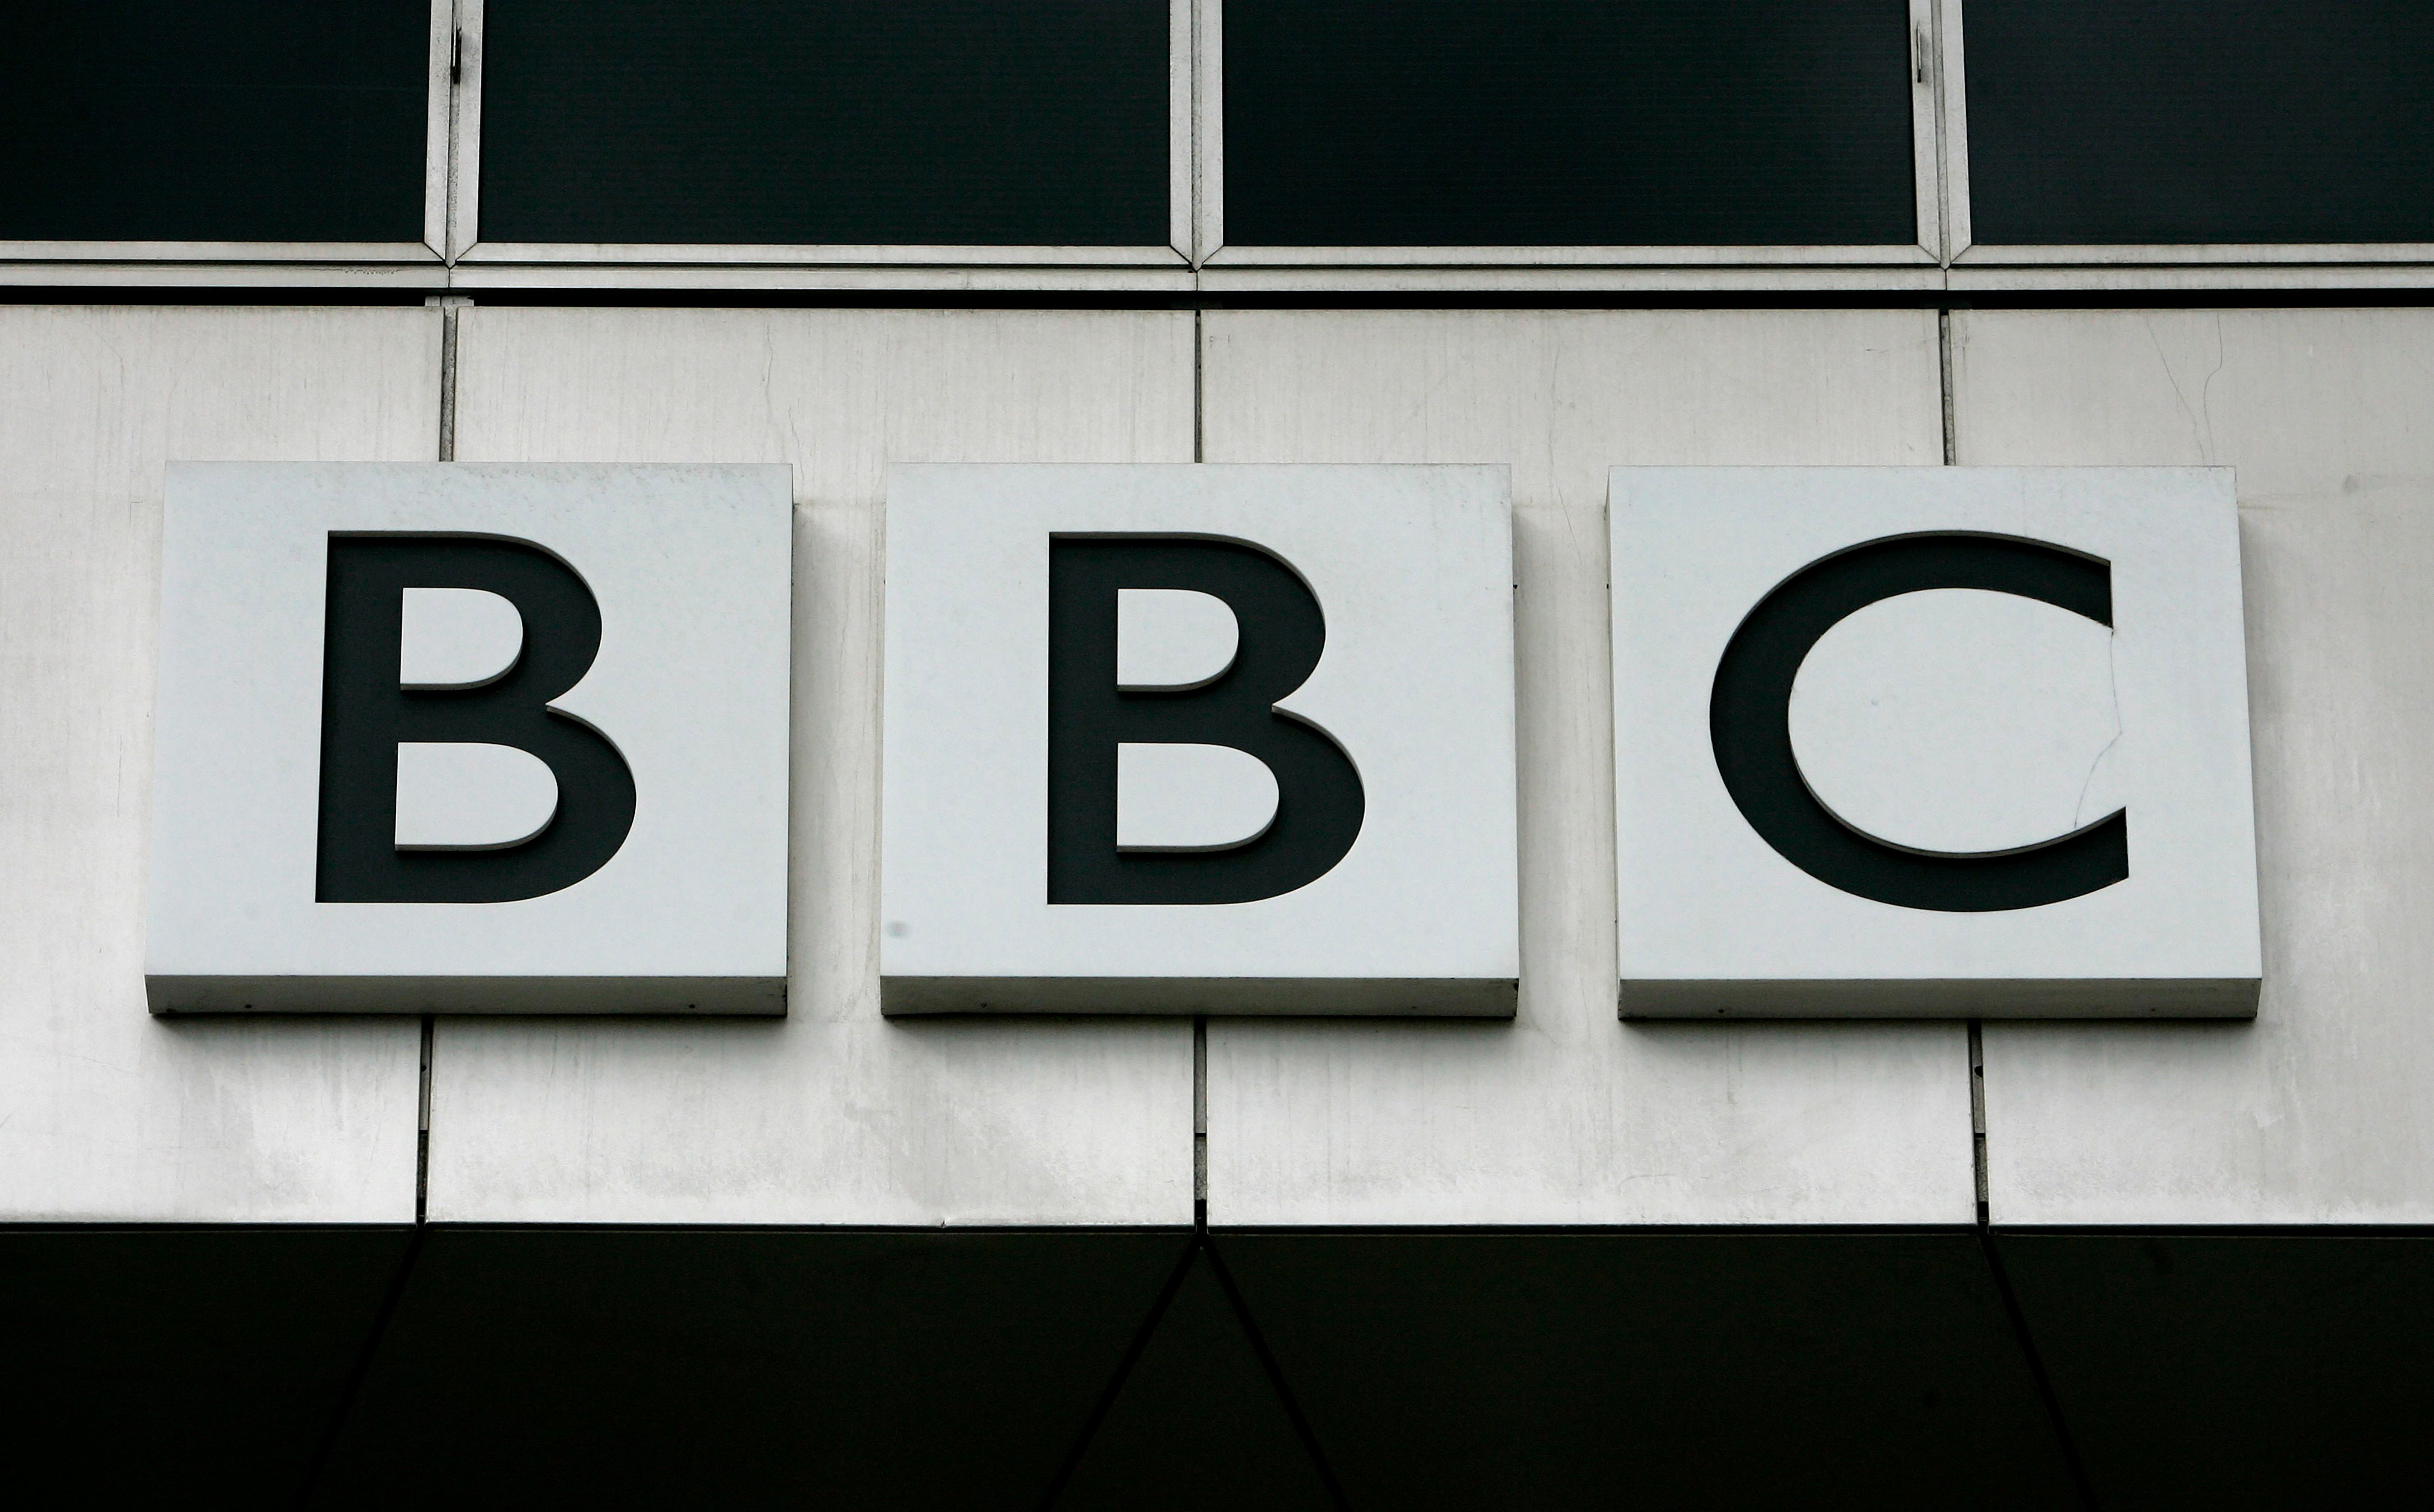 China bans BBC news broadcasts in apparent retaliation